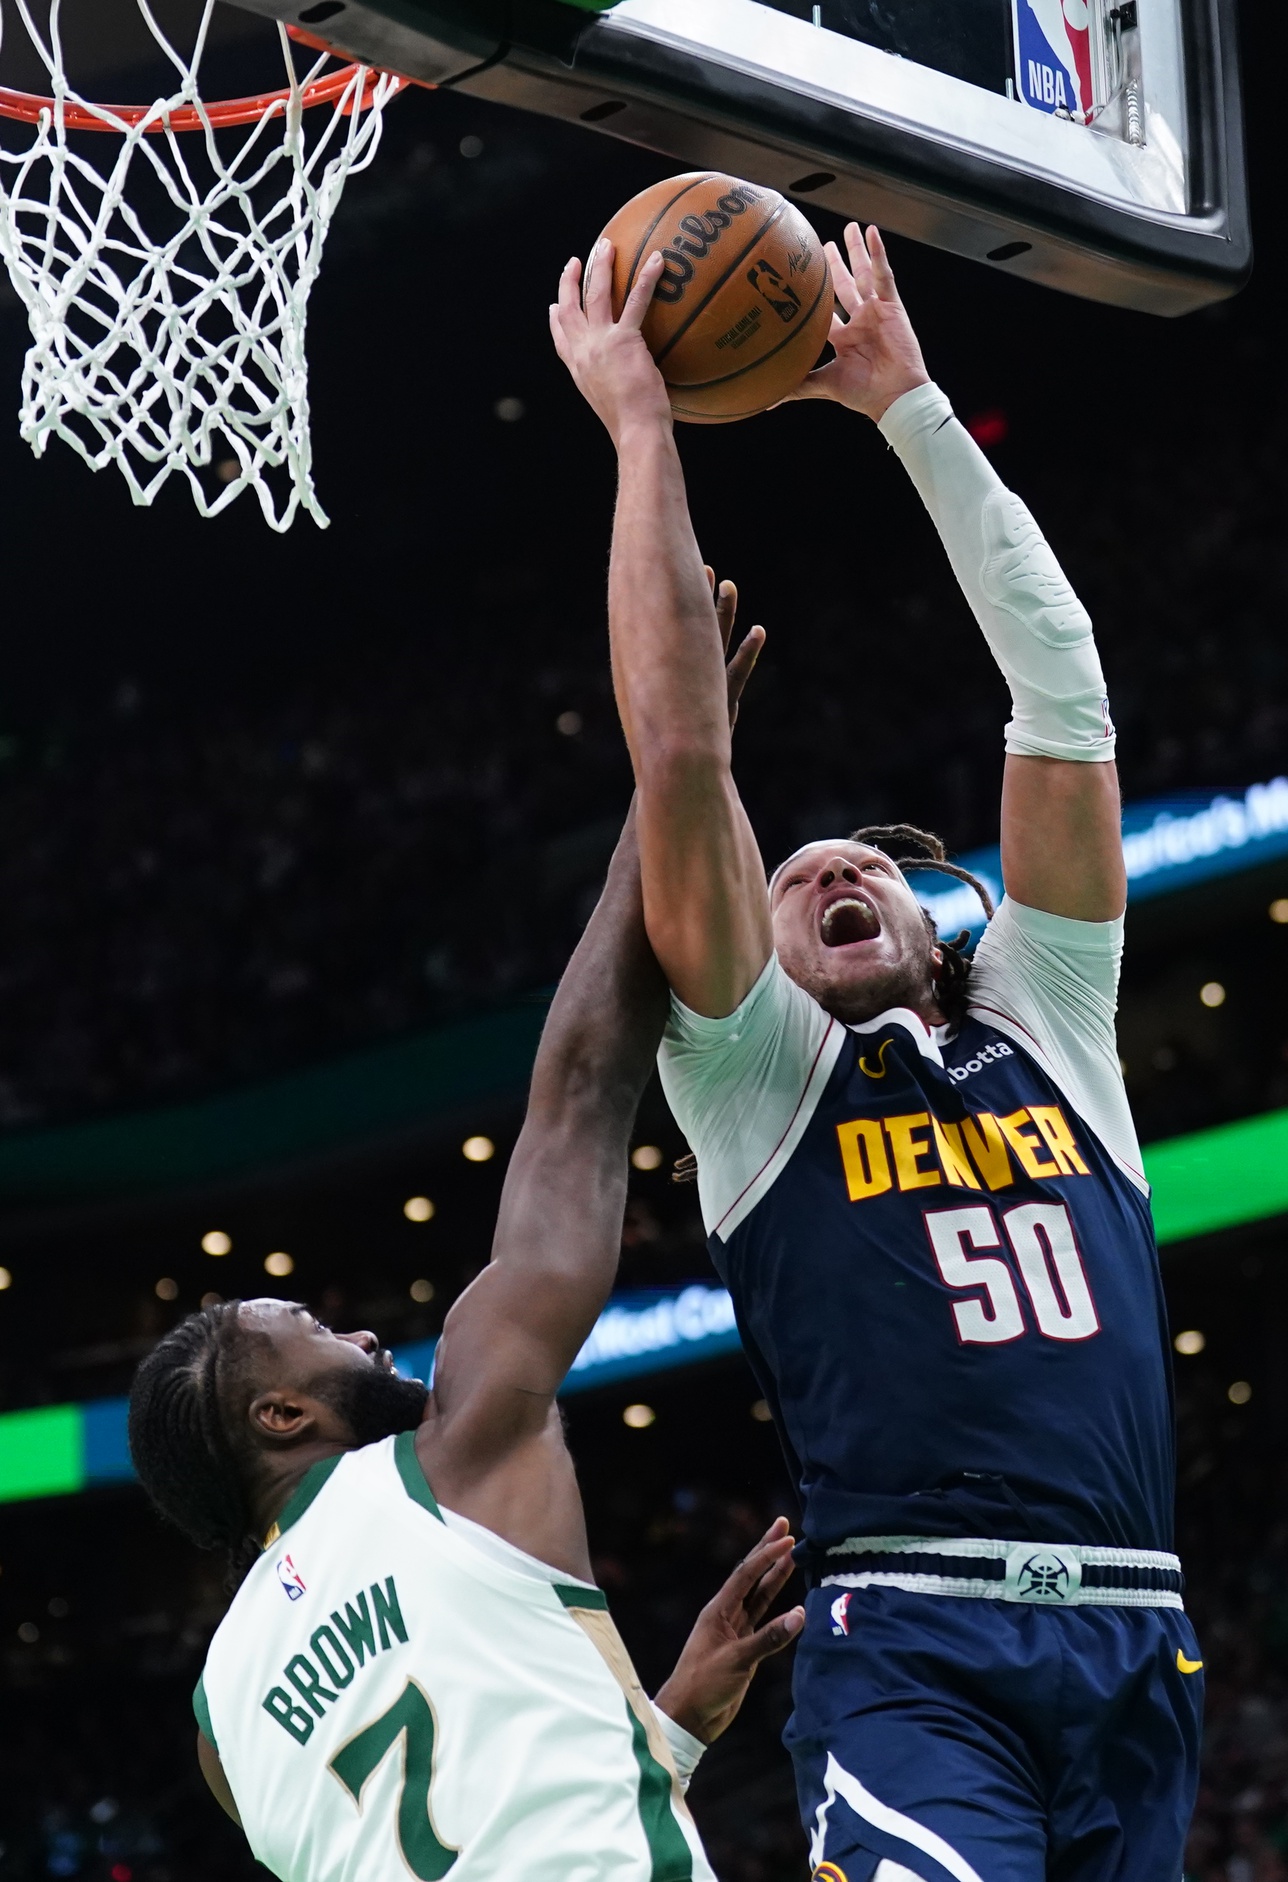 Denver Nuggets forward Aaron Gordon (50) shoots against Boston Celtics guard Jaylen Brown (7) in the first quarter at TD Garden.